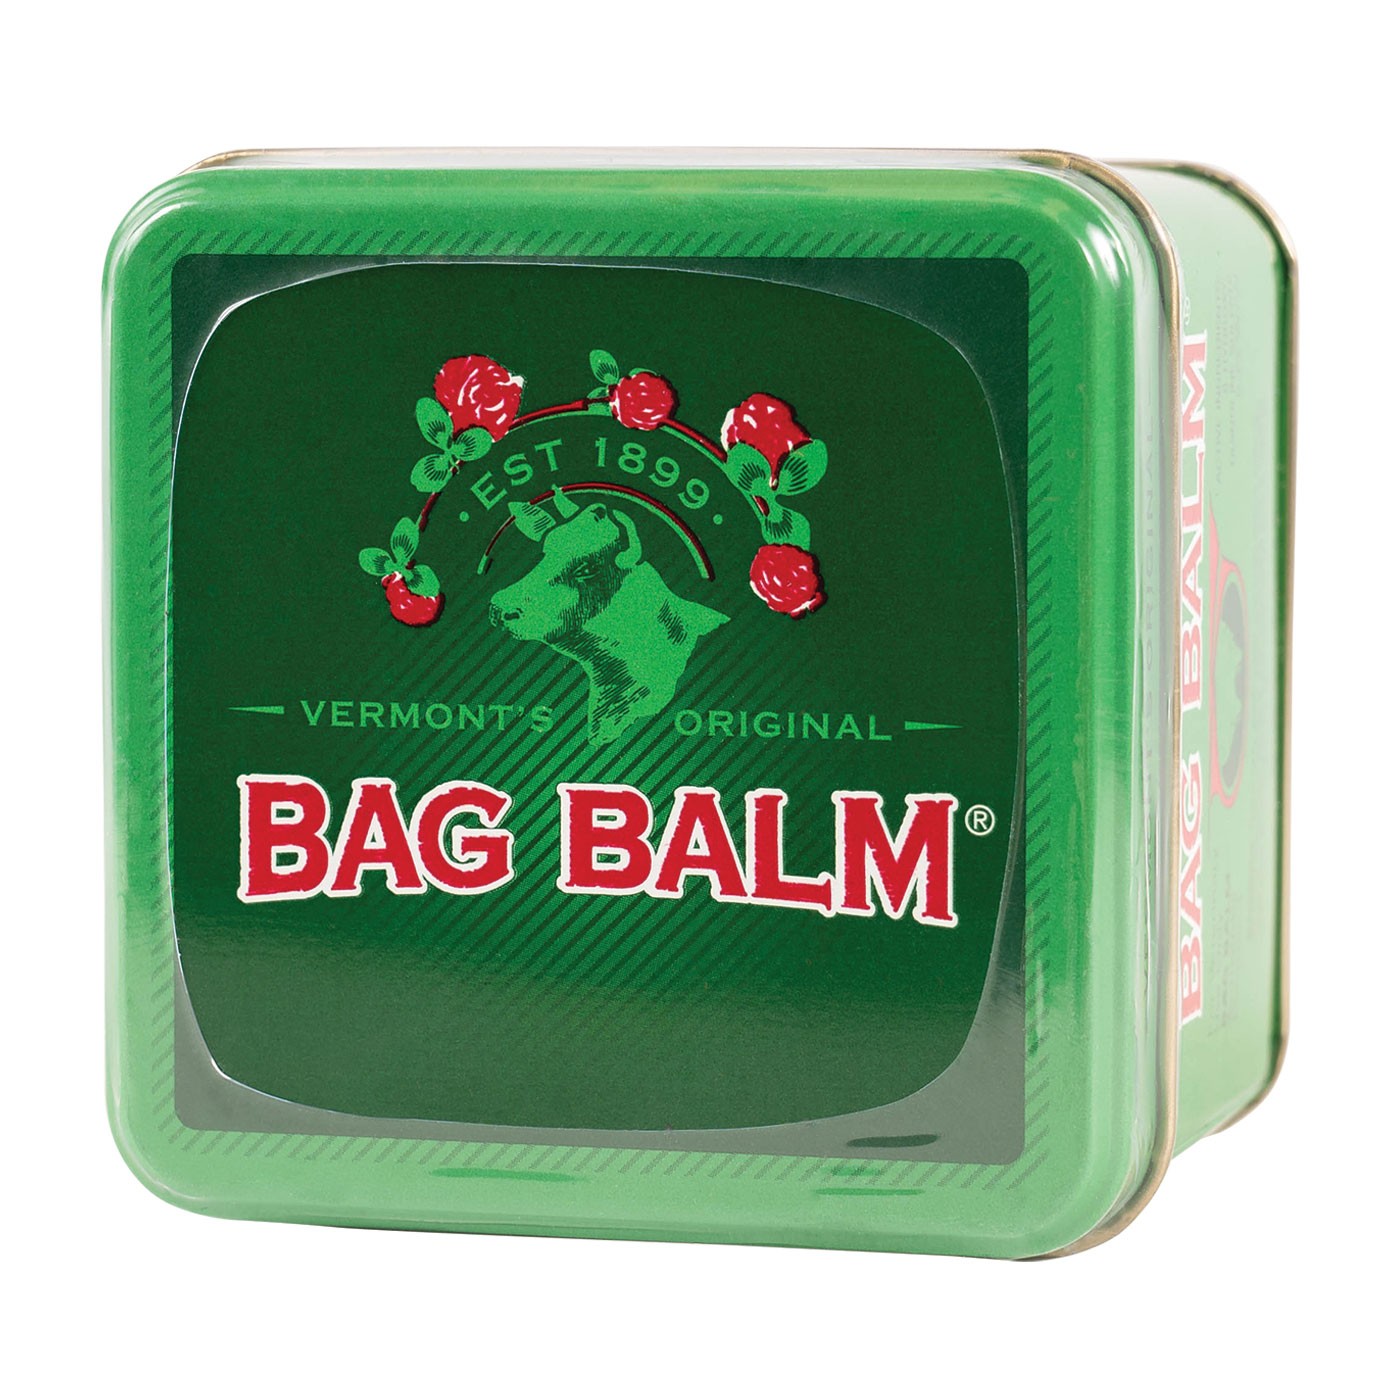 Amazon.com: BAG BALM 1 OZ (Pack of 3) : Beauty & Personal Care